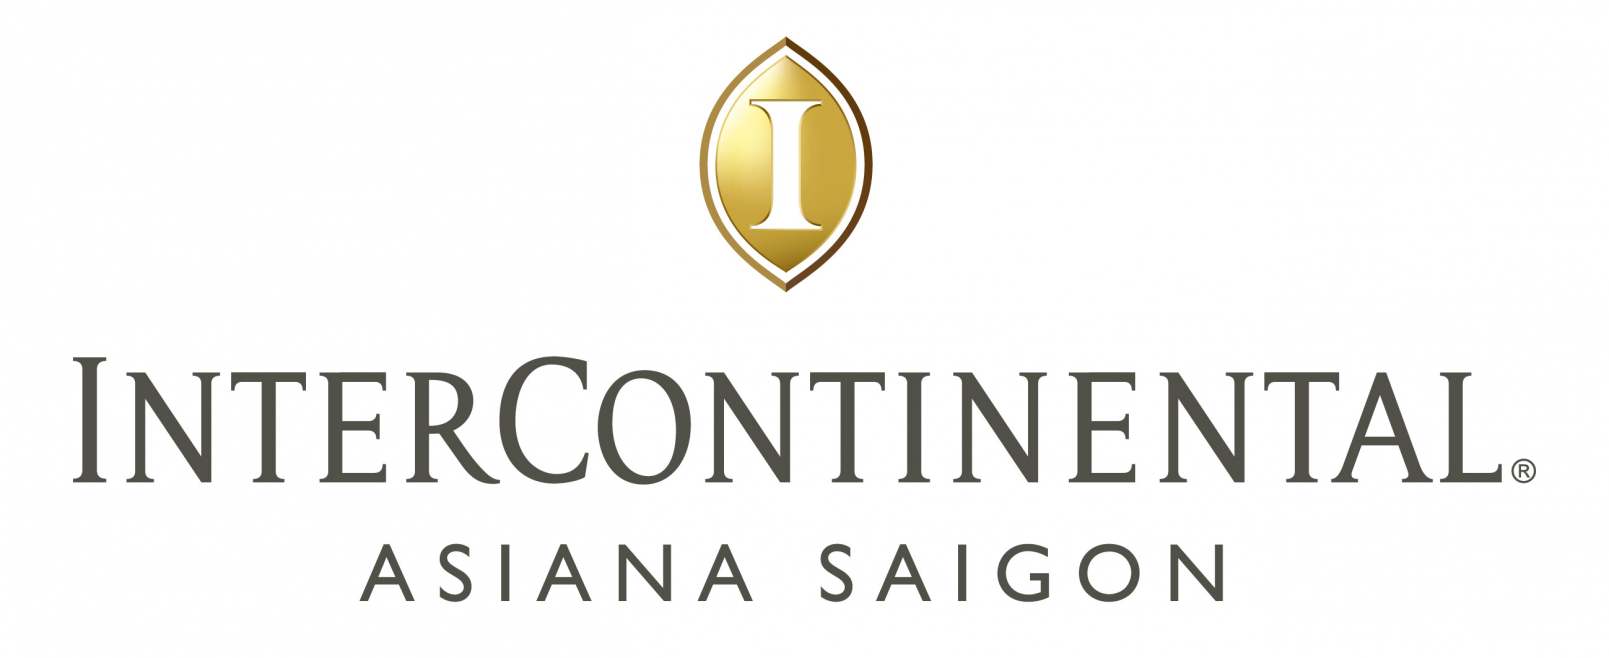 InterContinental Asiana Saigon Logo